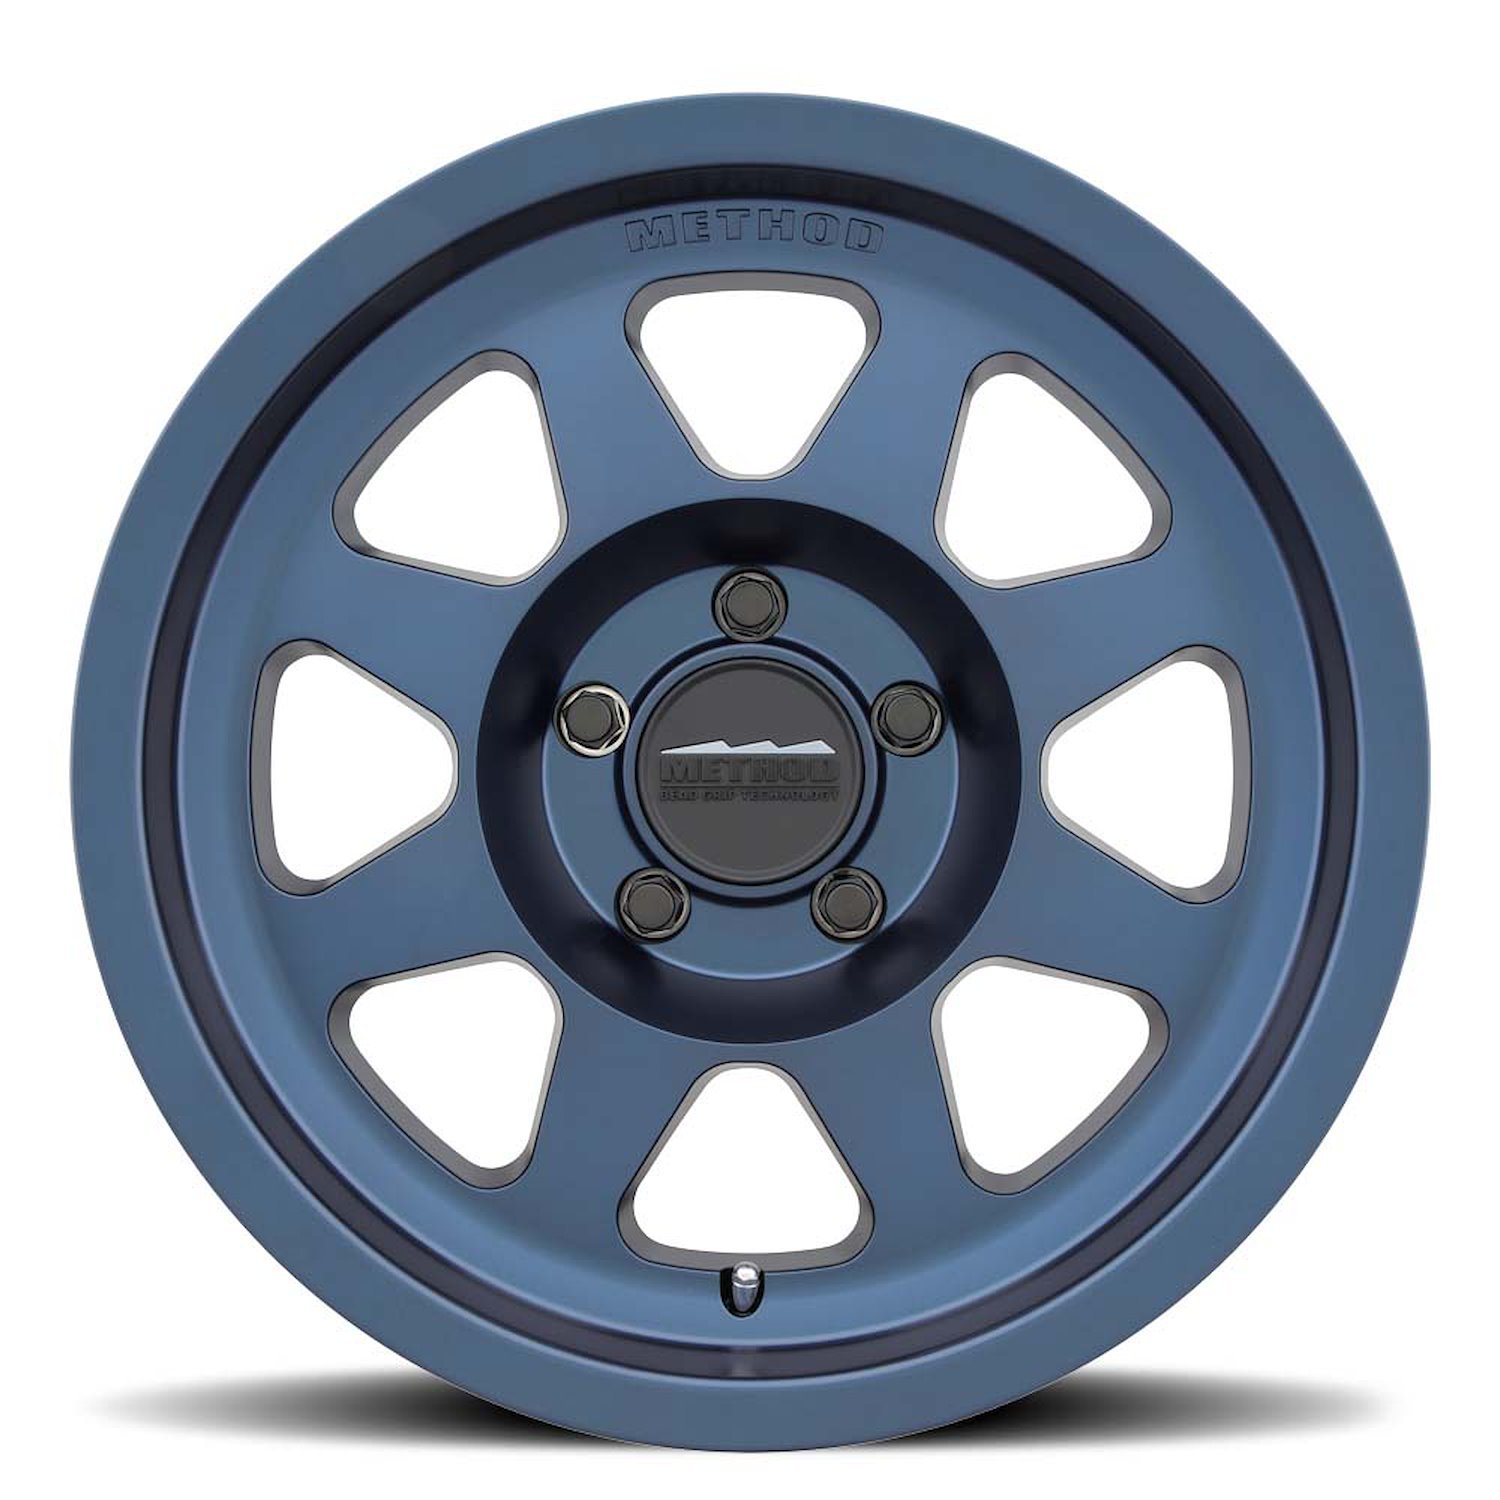 MR70178550600 TRAIL MR701 Bead Grip Wheel [Size: 17" x 8.5"] Bahia Blue